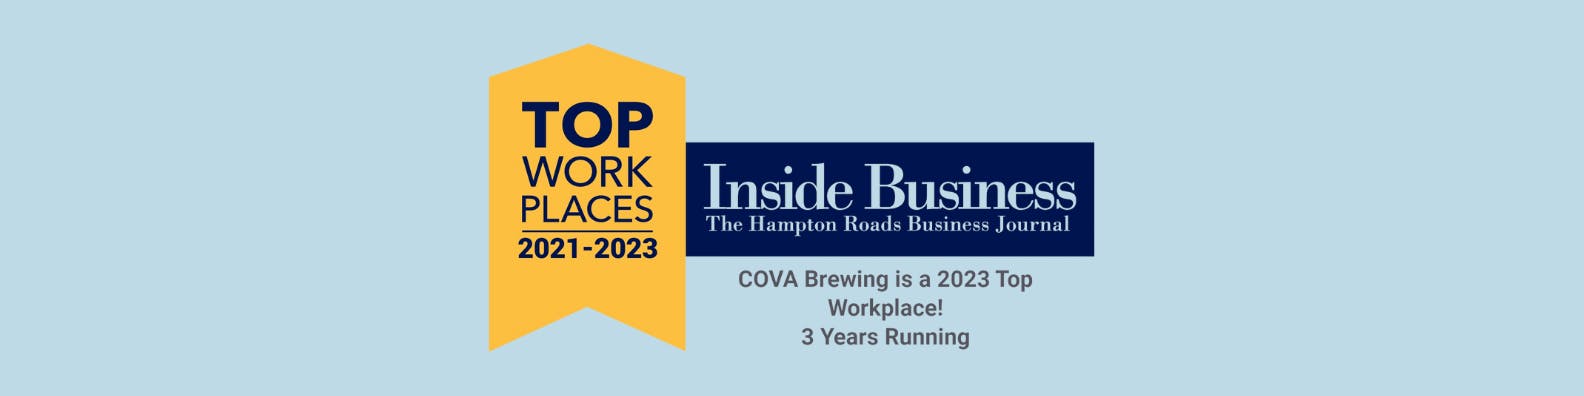 Top Workplace Award 2021-2023